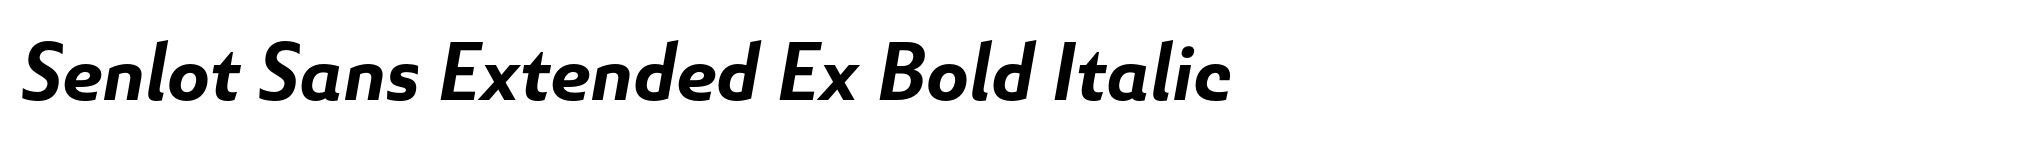 Senlot Sans Extended Ex Bold Italic image